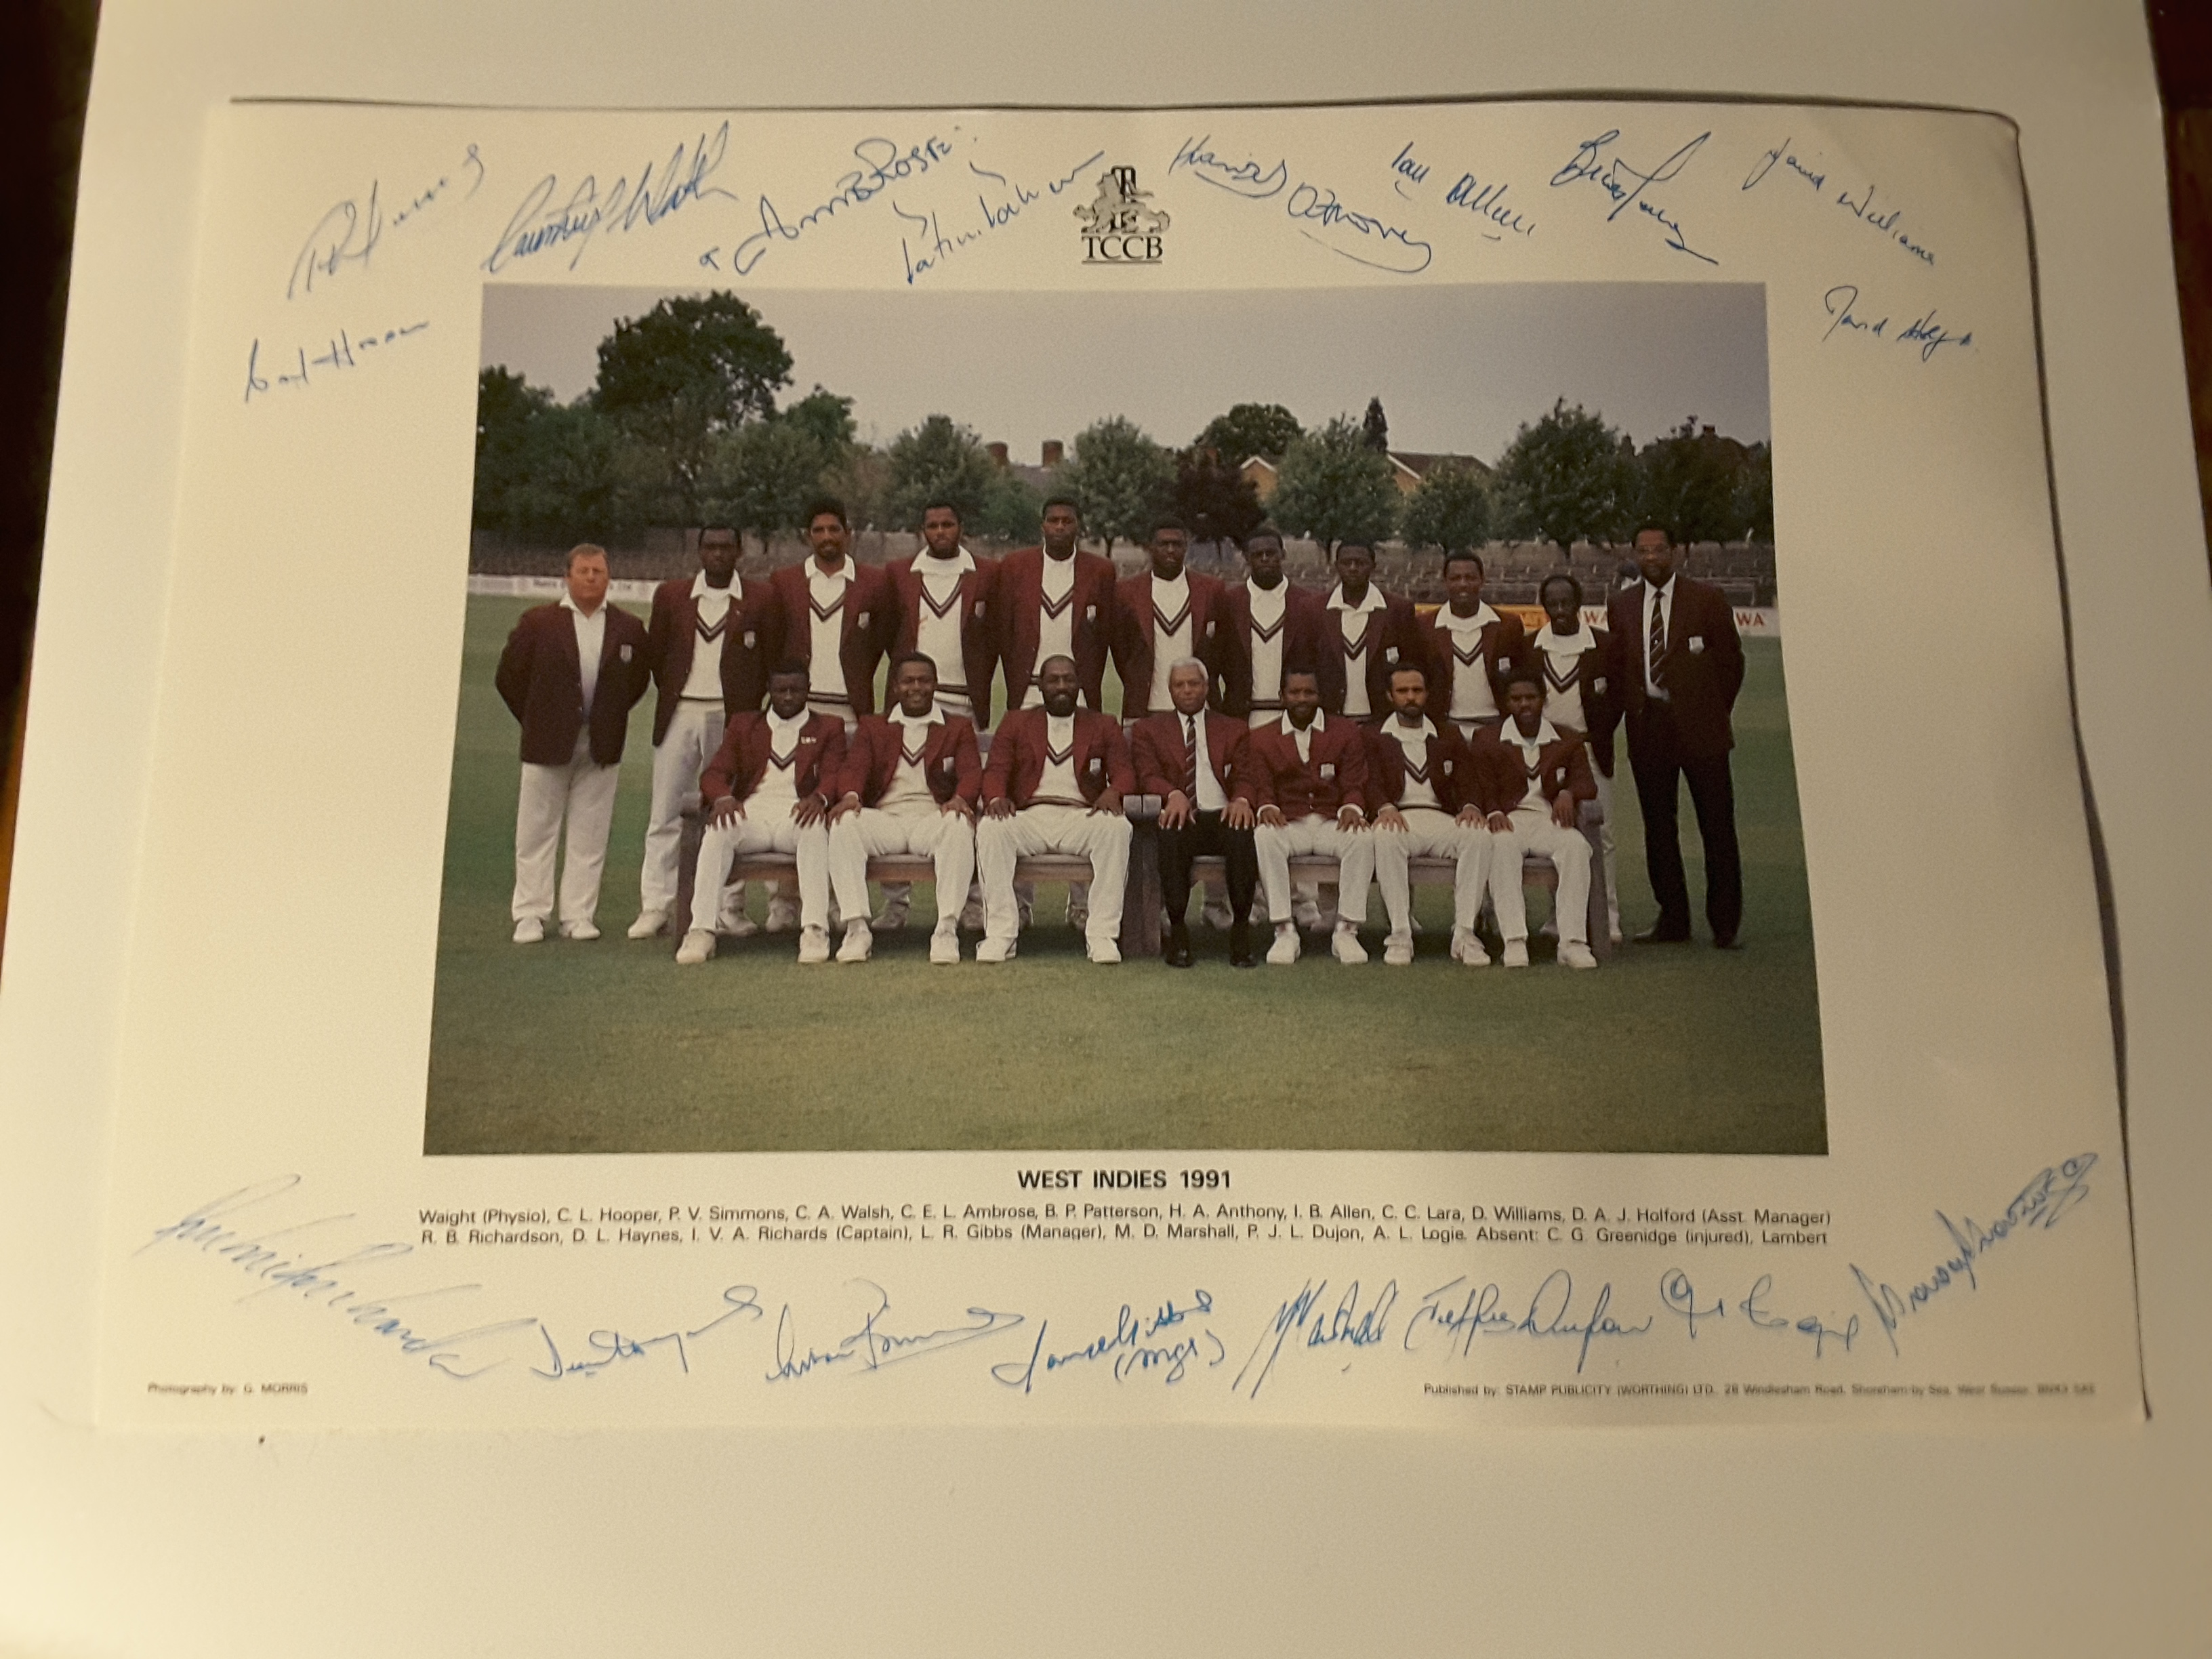 1991 West Indies Cricket Team Photo - Image 2 of 2